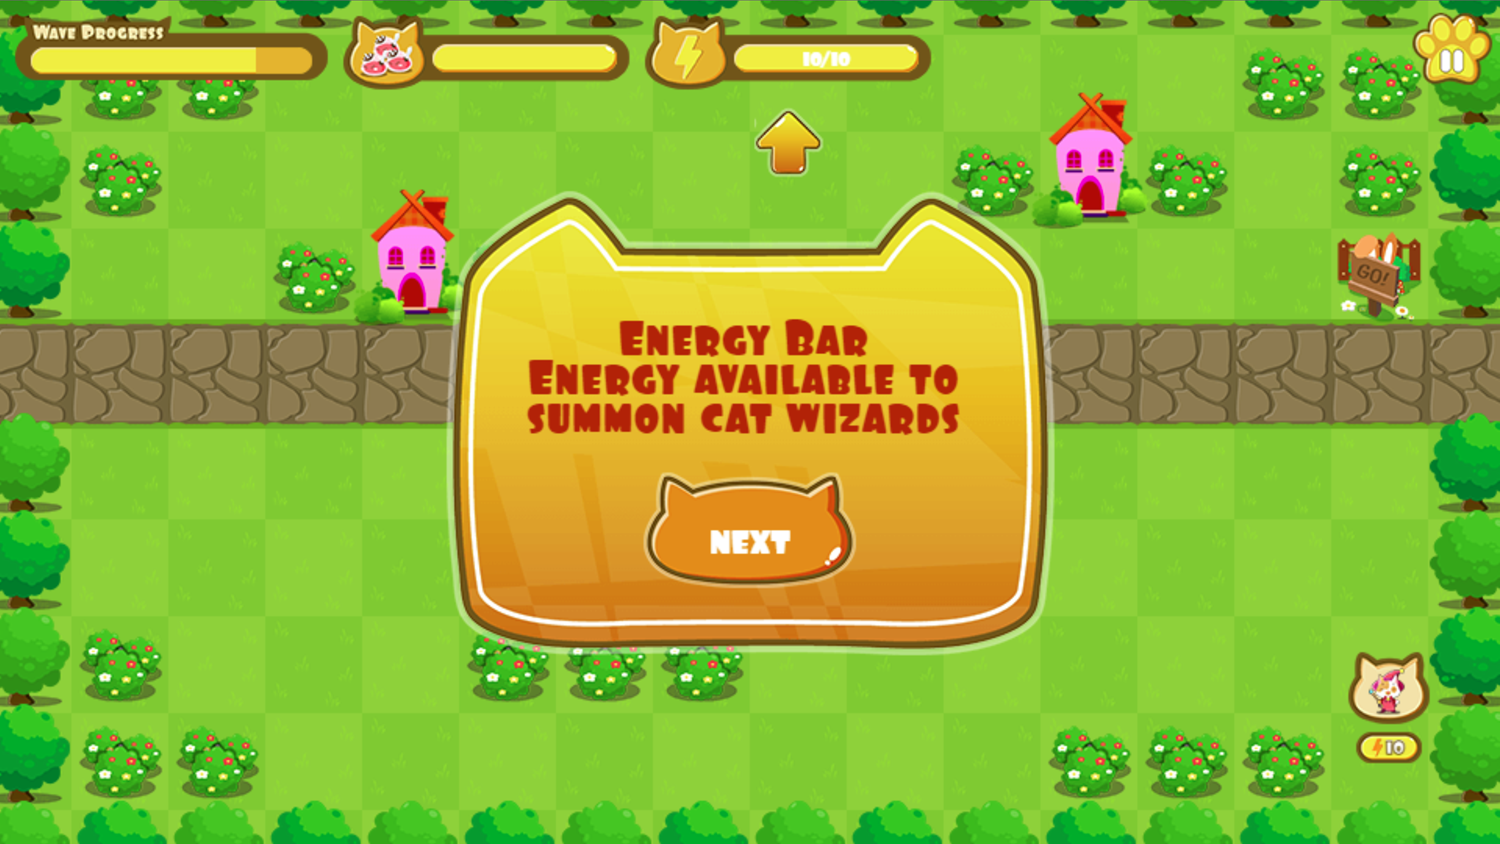 Cat Wizard Defense Game Energy Bar Instructions Screen Screenshot.